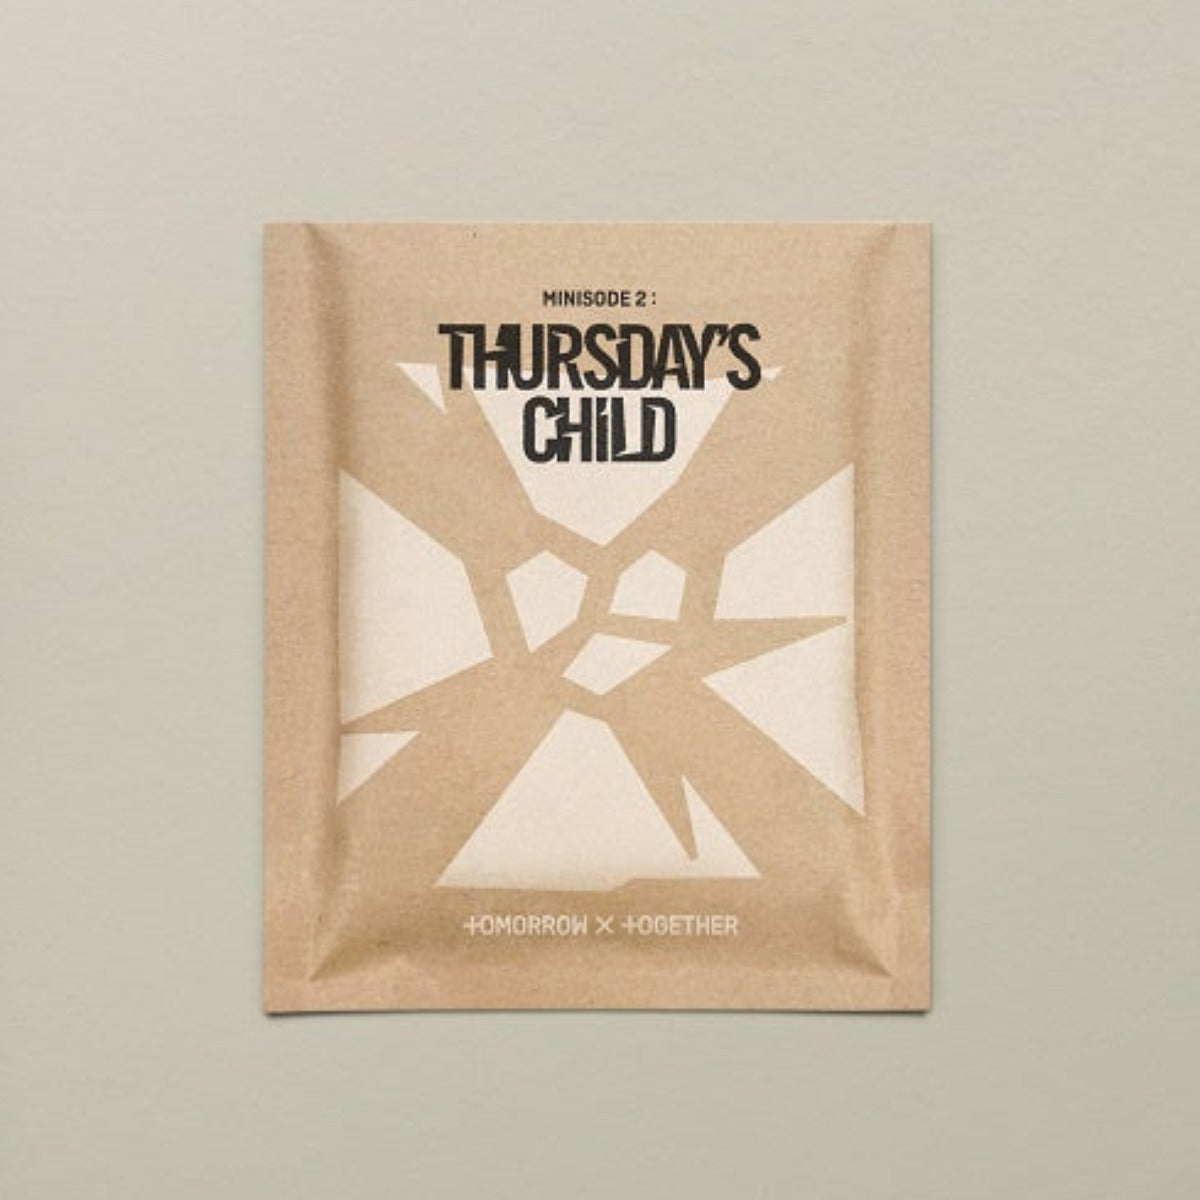 TXT Mini Album Vol. 4 - minisode 2: Thursday's Child (TEAR version)